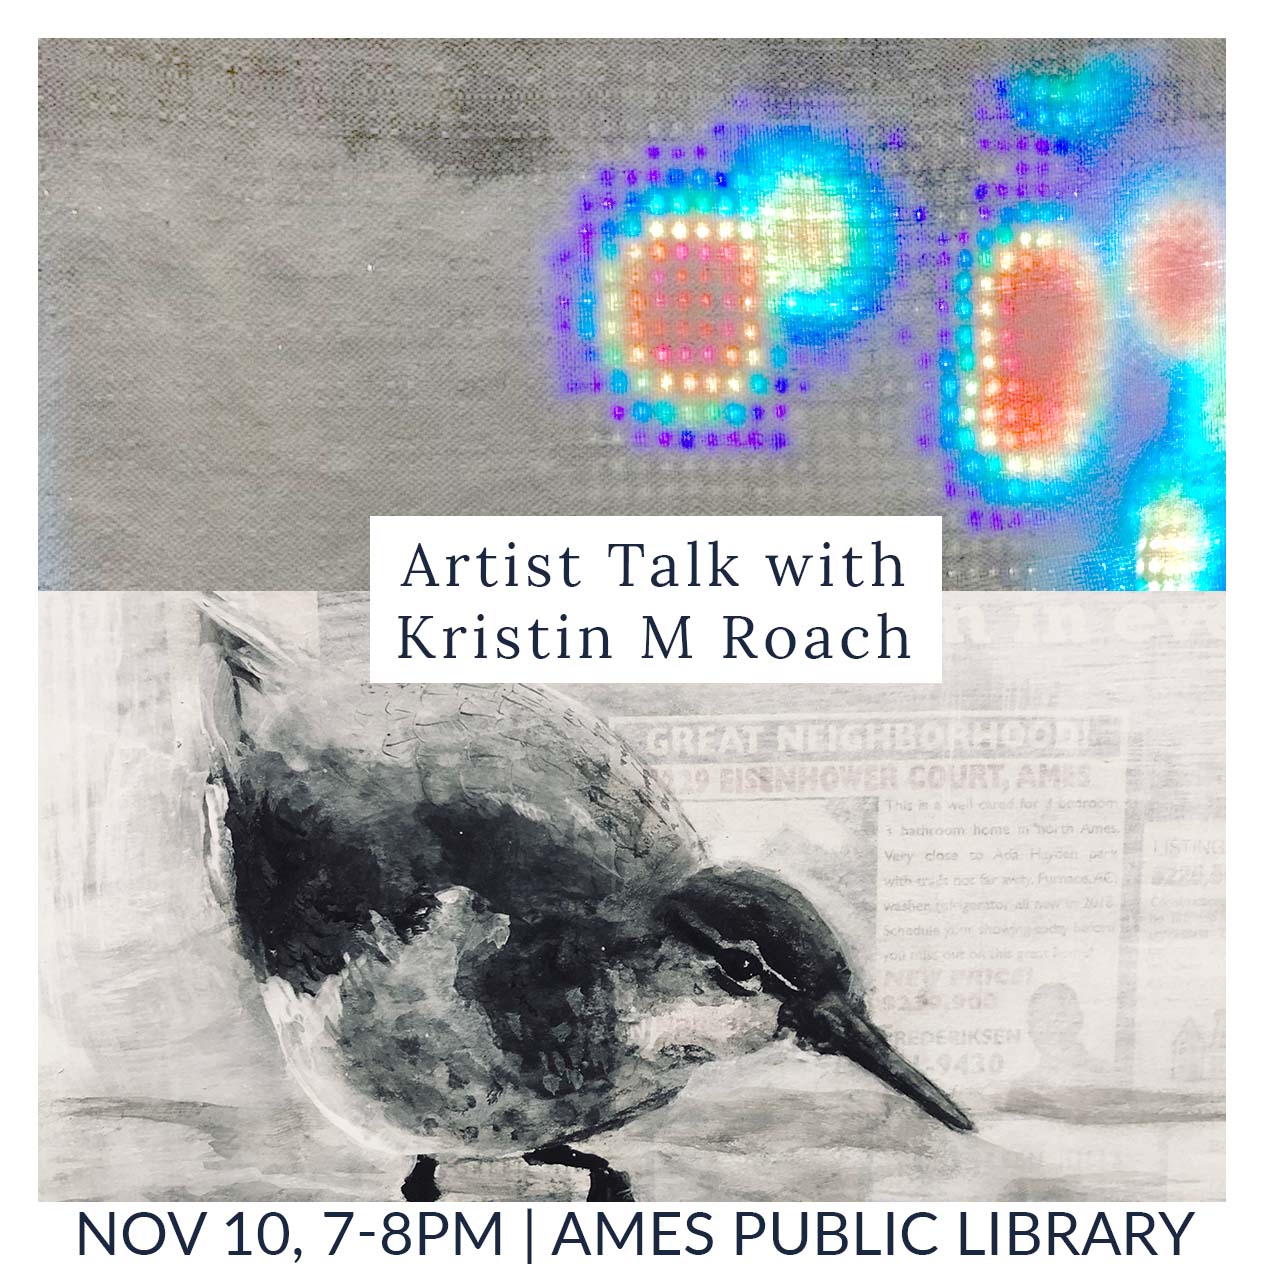 Artist Talk with Kristin M Roach, November 10, 7-8pm, Ames Public Library